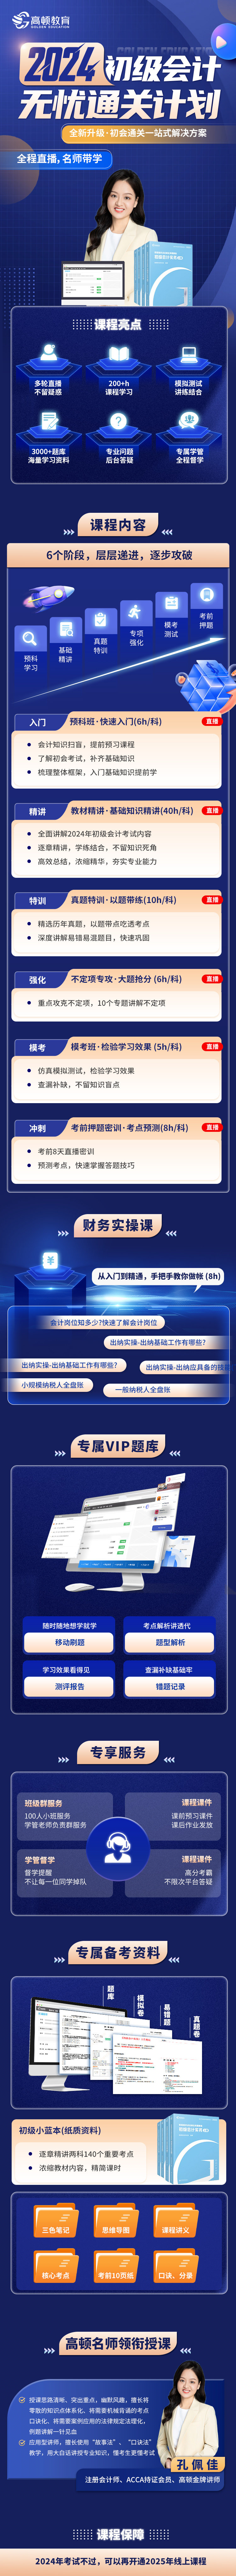 https://simg01.gaodunwangxiao.com/uploadfiles/product-center/202310/08/395fb_20231008083652.jpg